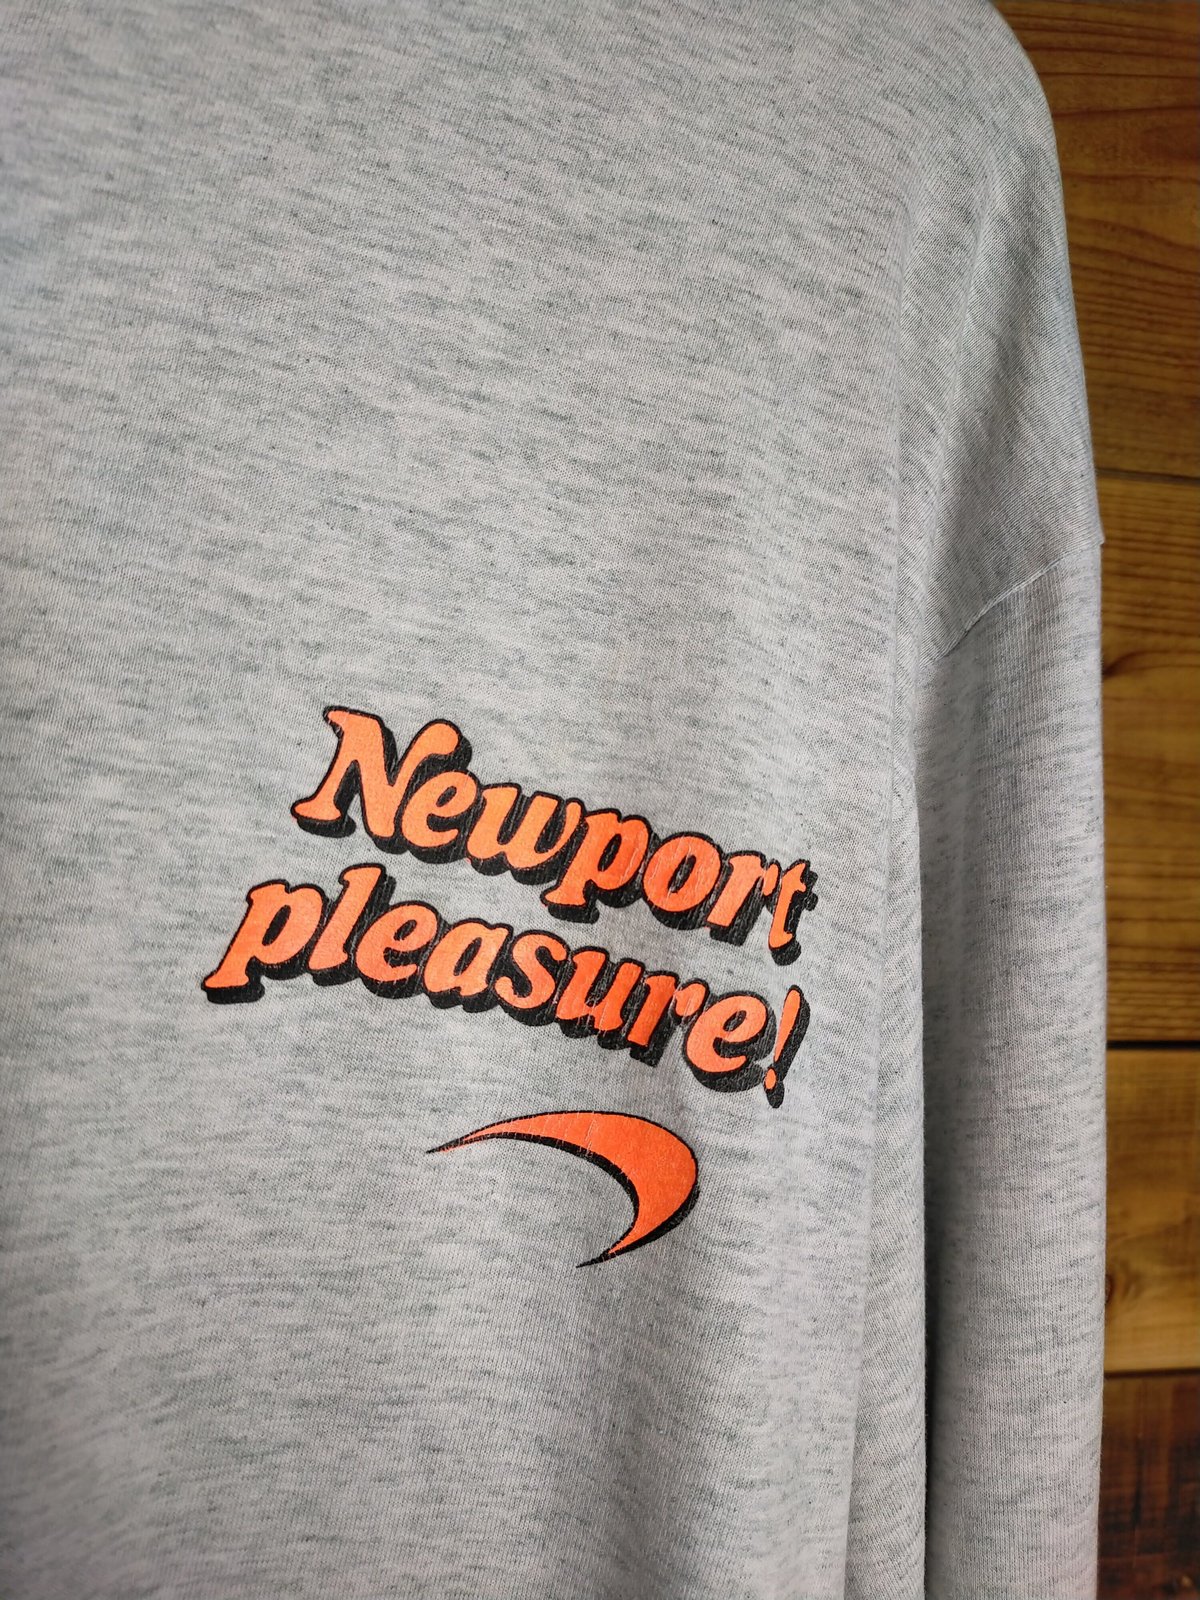 Newport pleasure   90s  XLsup